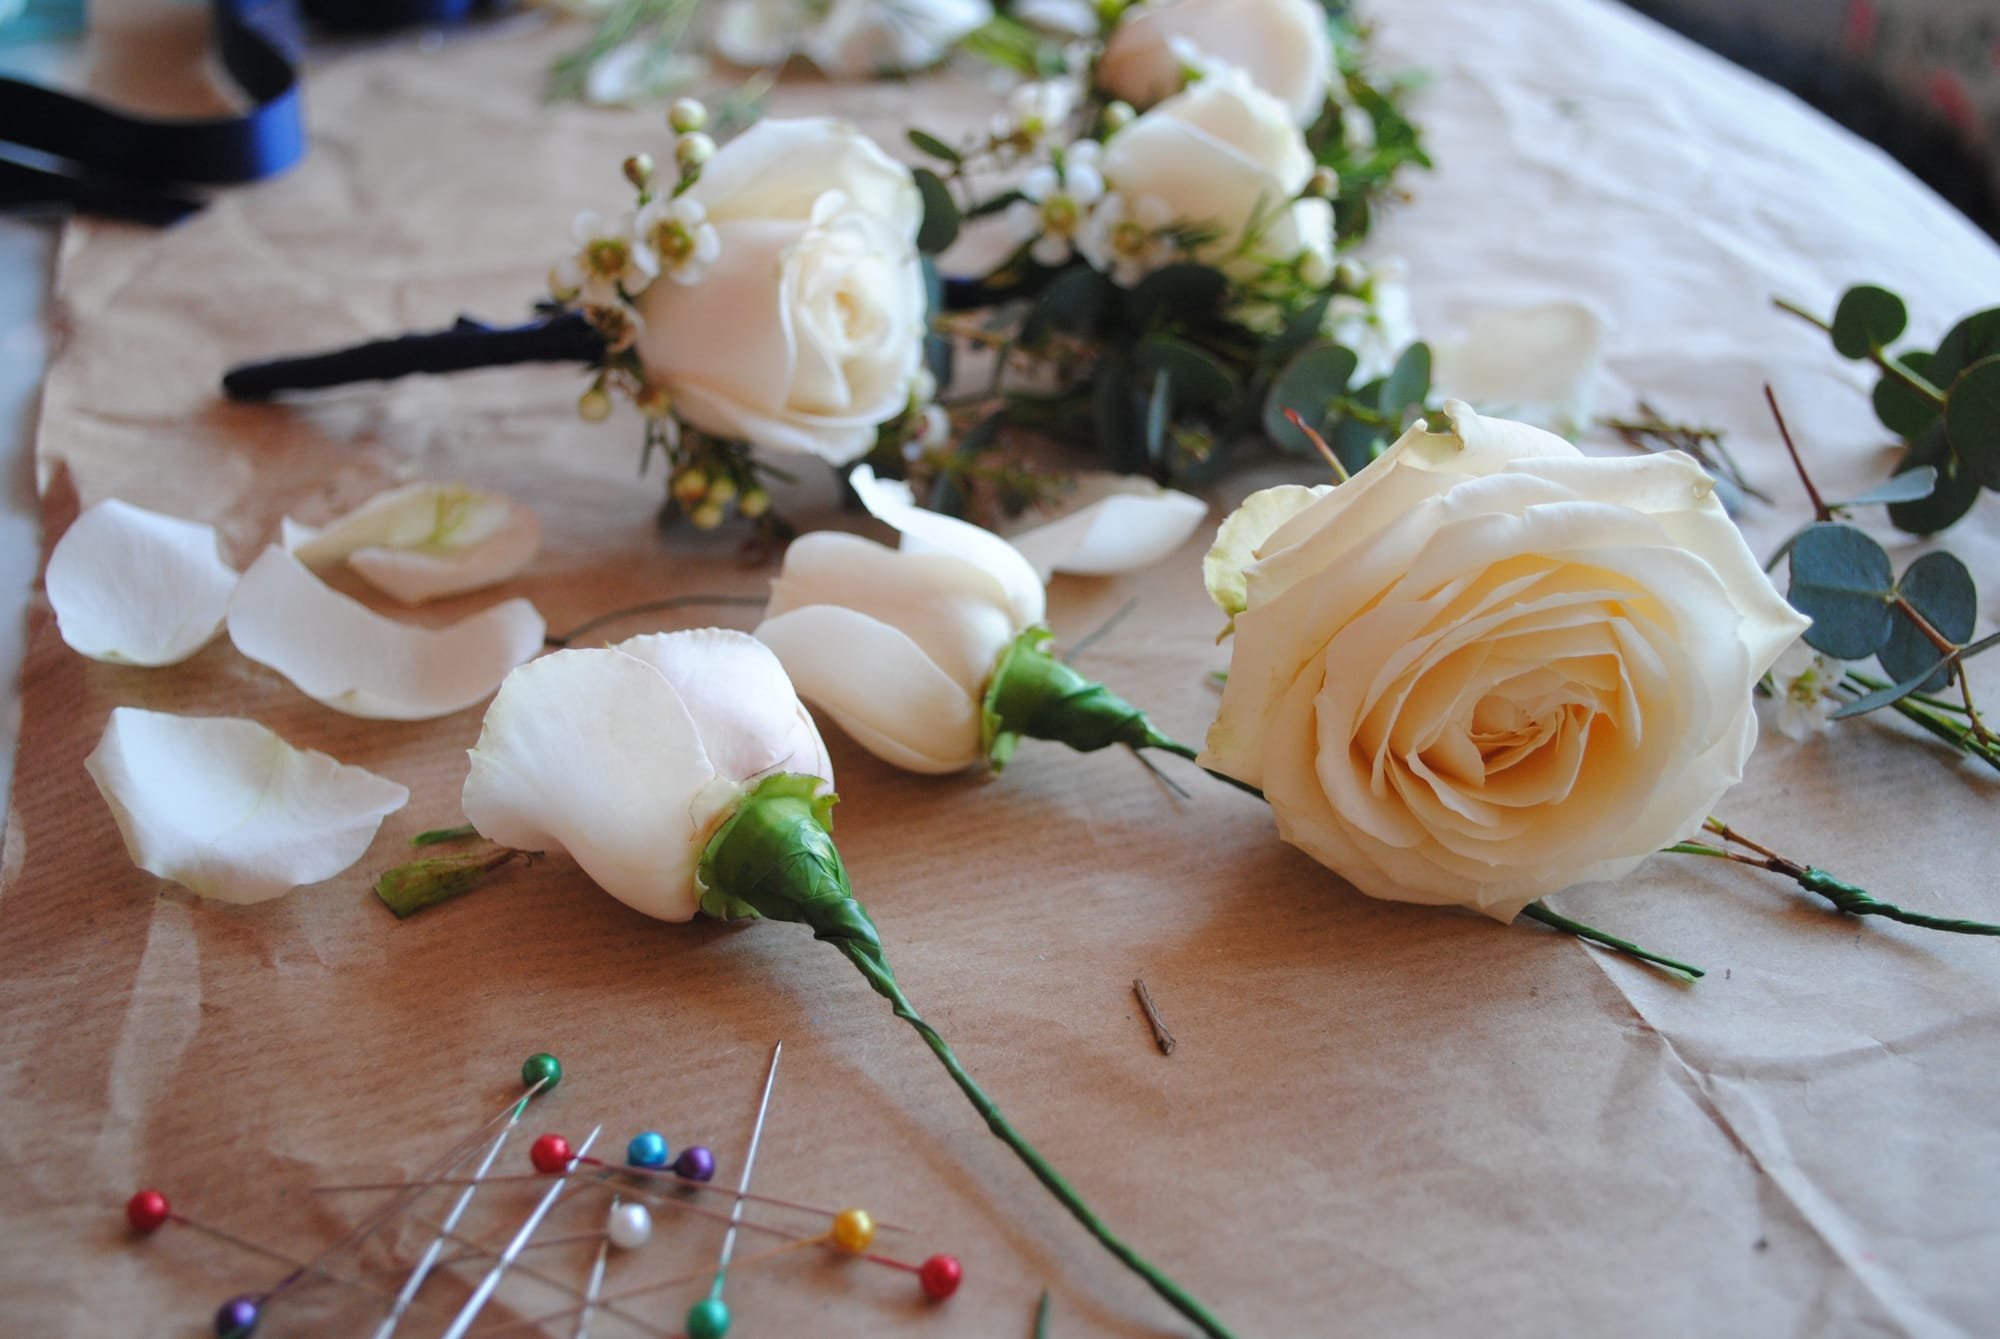 Rose buttonholes in progress.